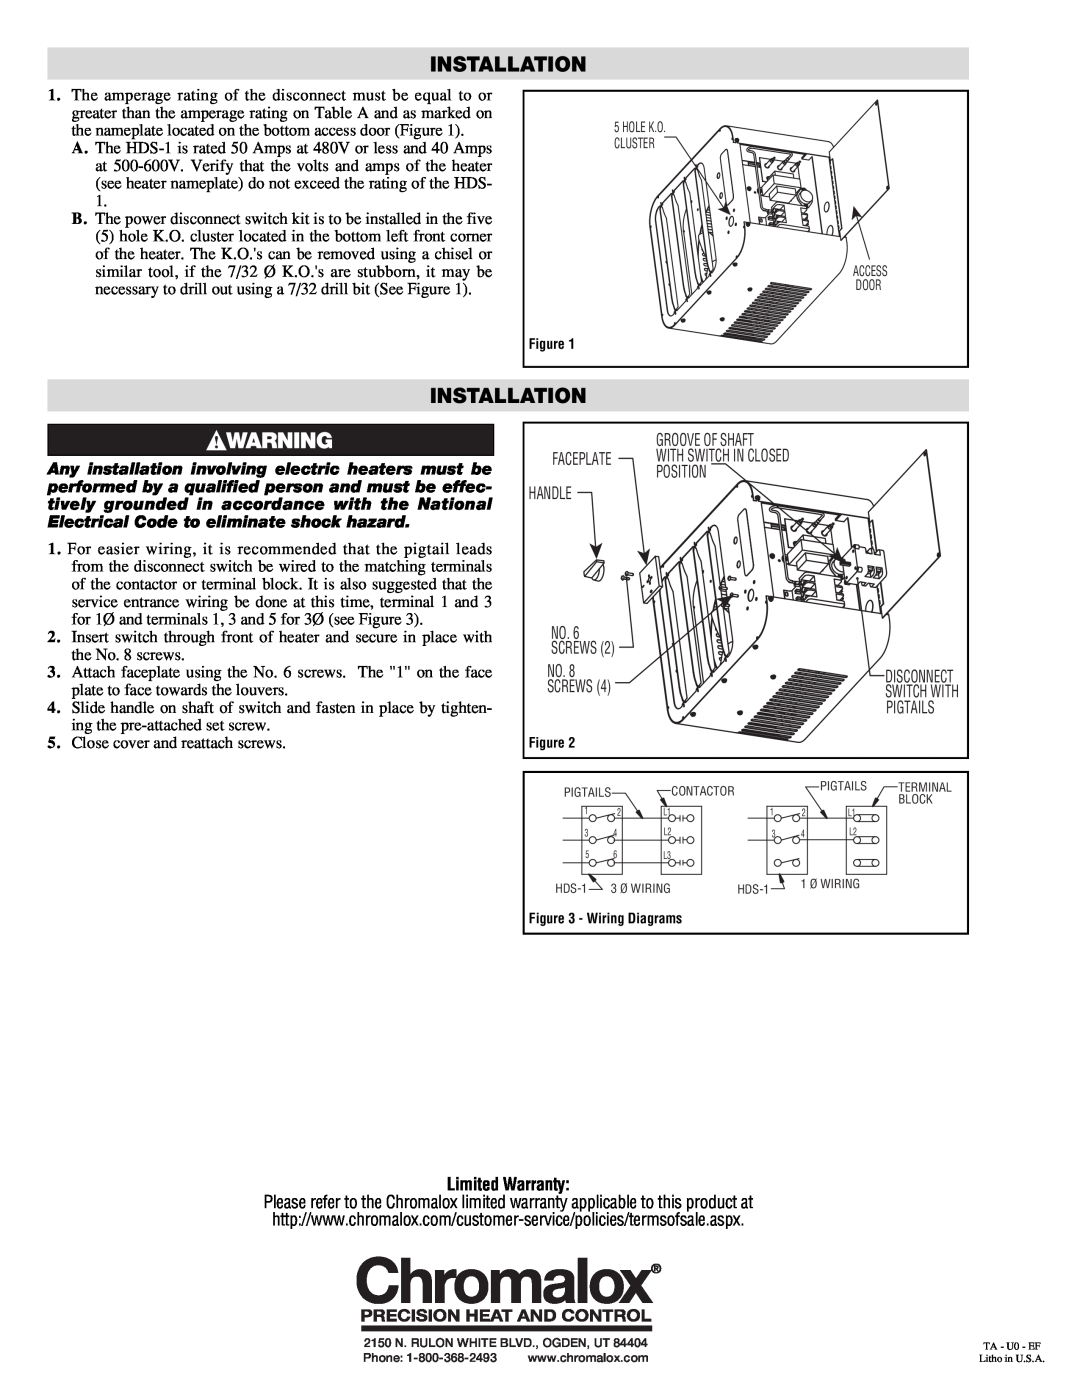 Chromalox PF207 specifications Installation, Limited Warranty 